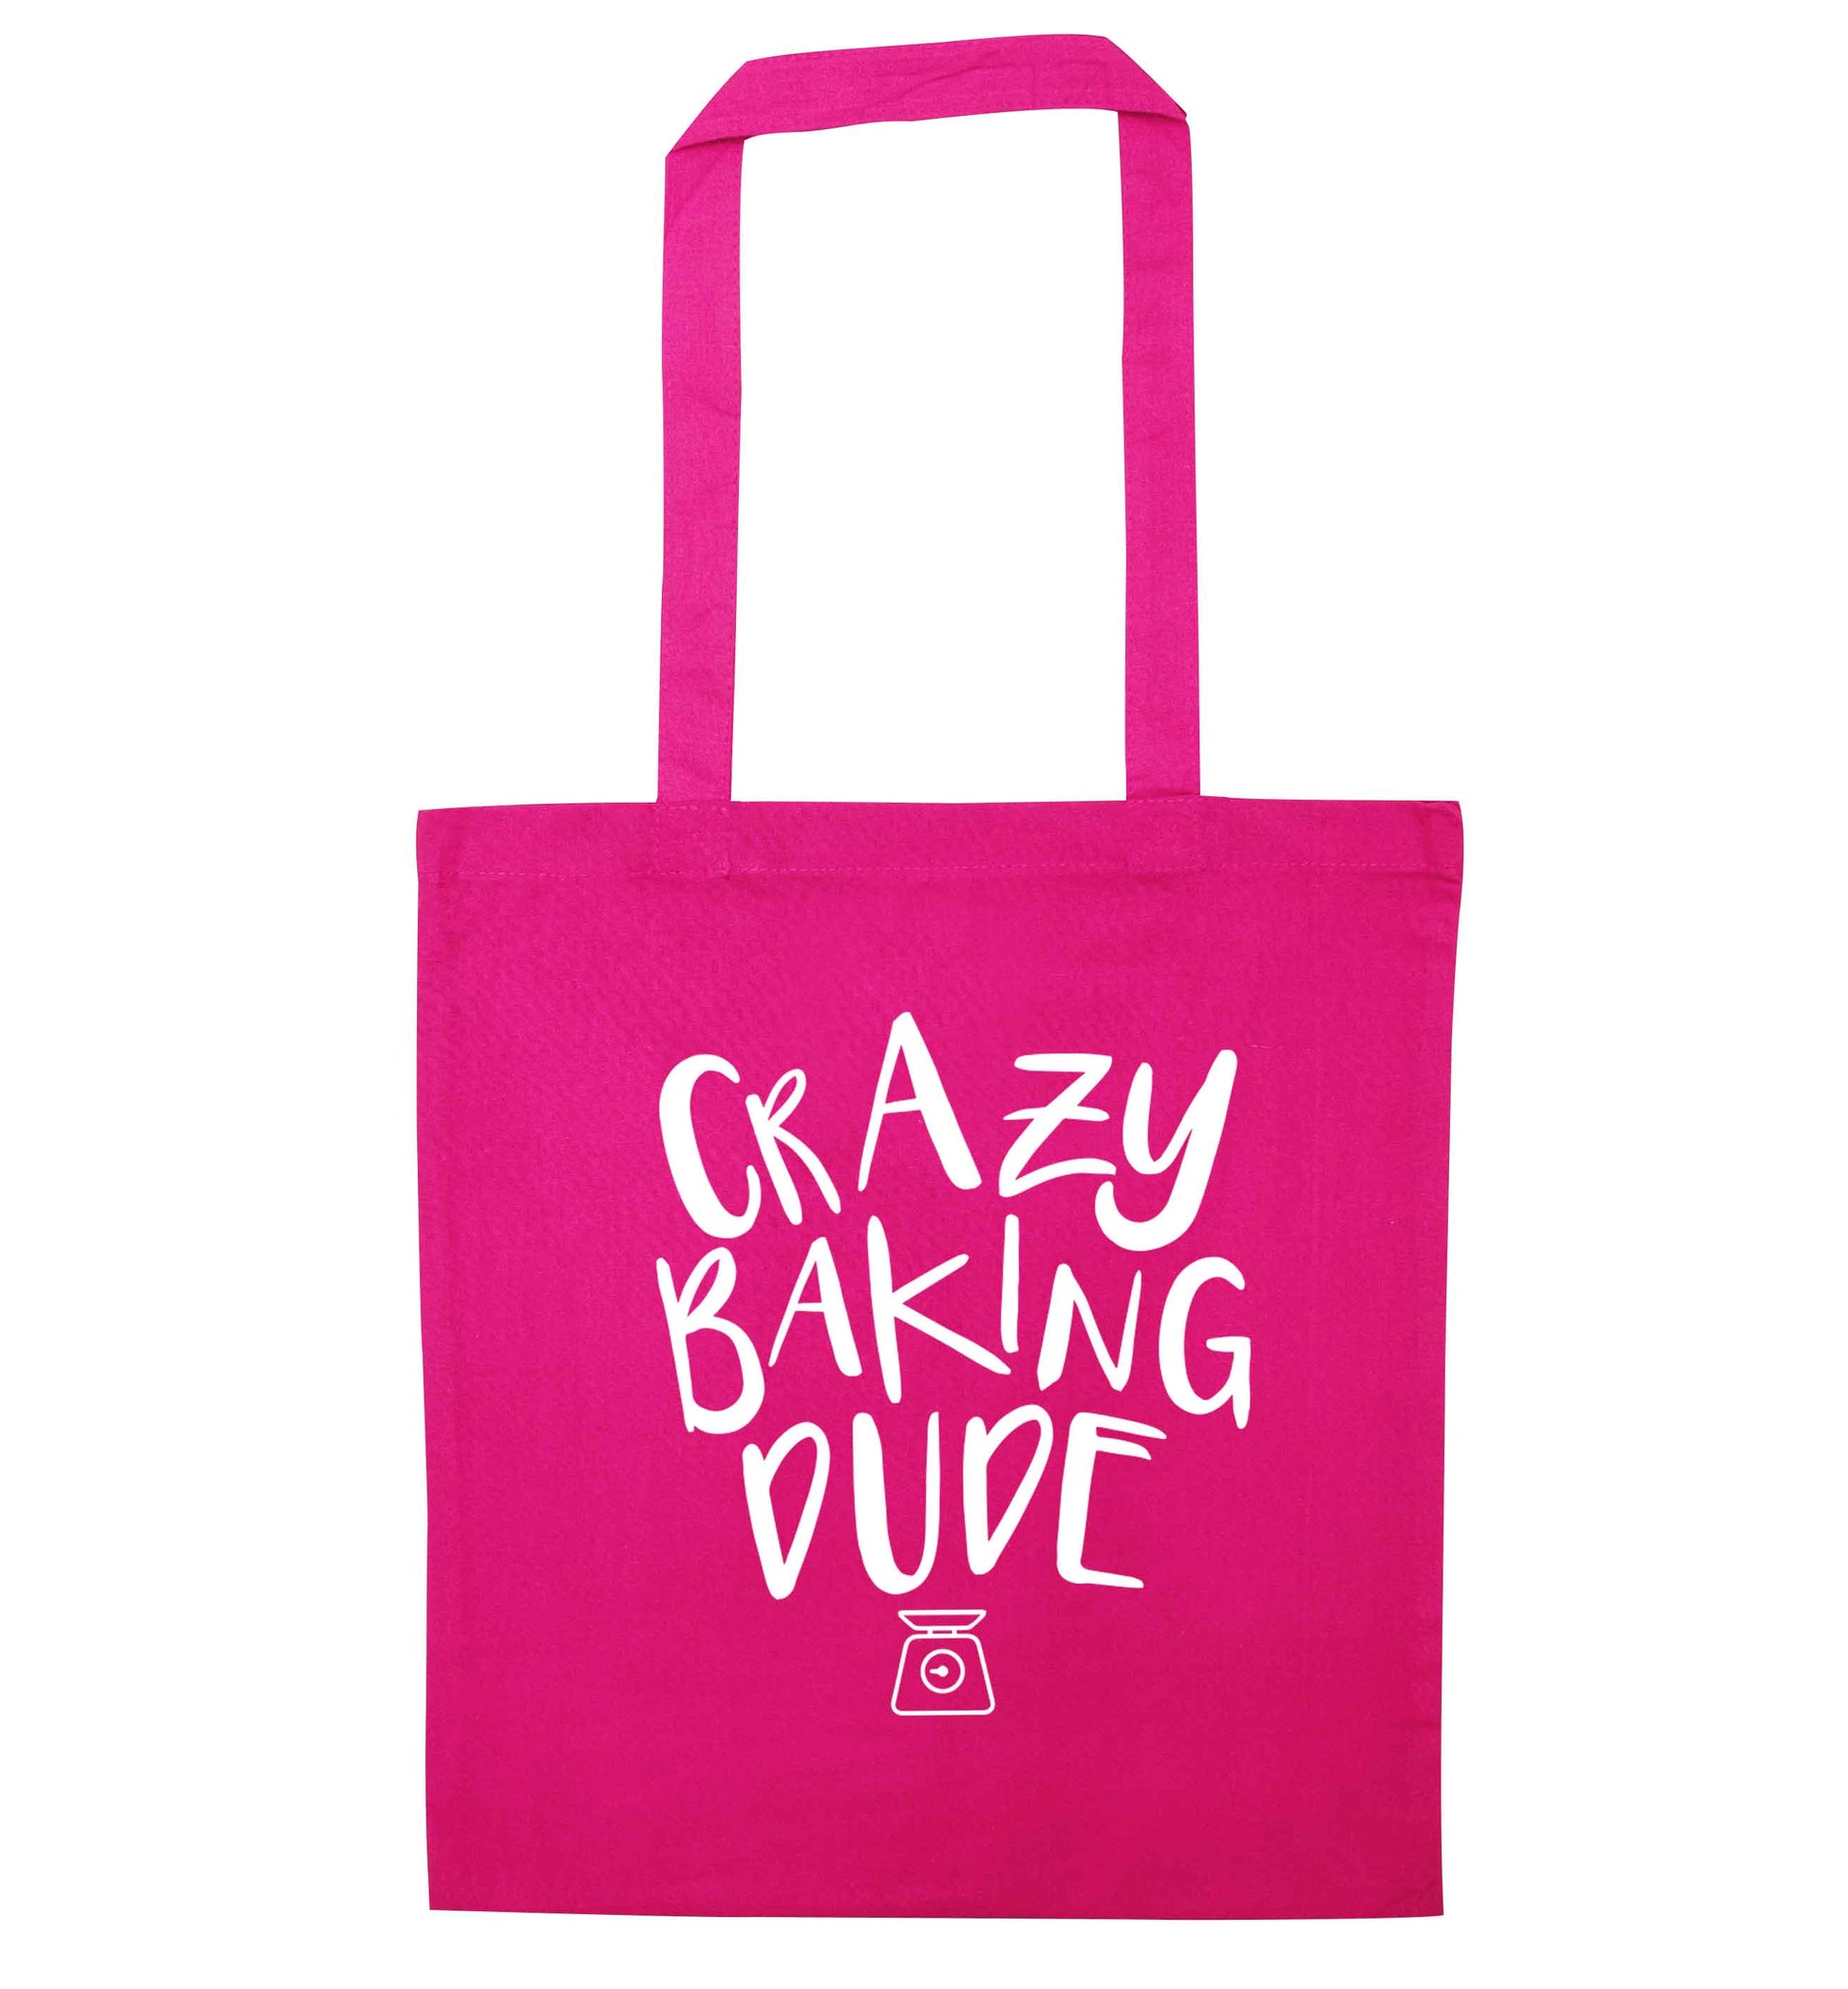 Crazy baking dude pink tote bag